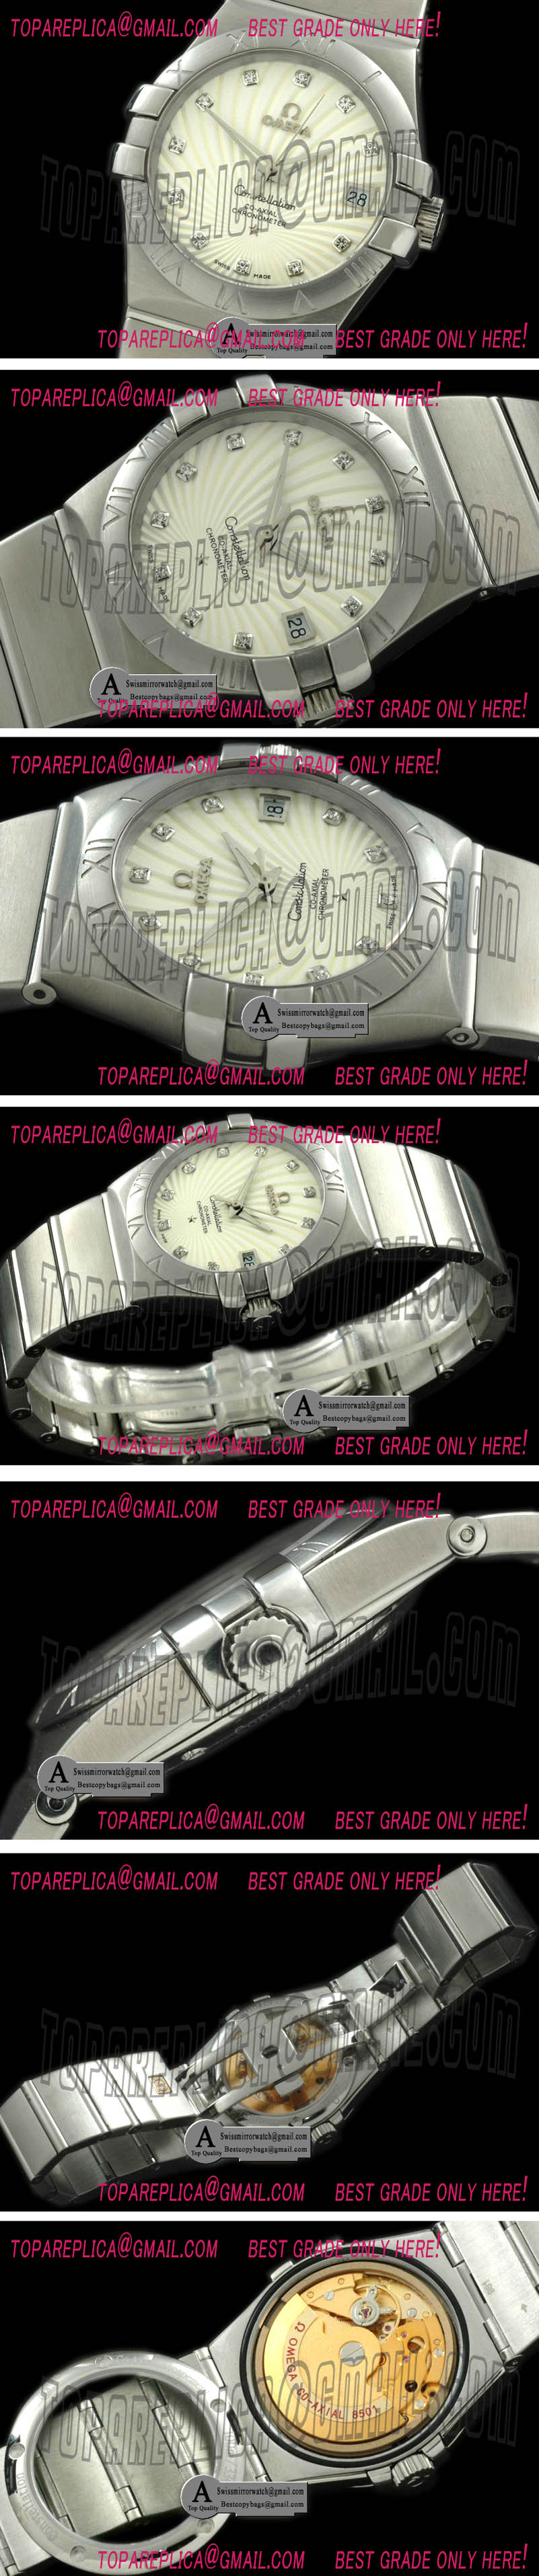 Omega Double Eagle Midsize SS/SS White Diamond Asian 2813 Replica Watches